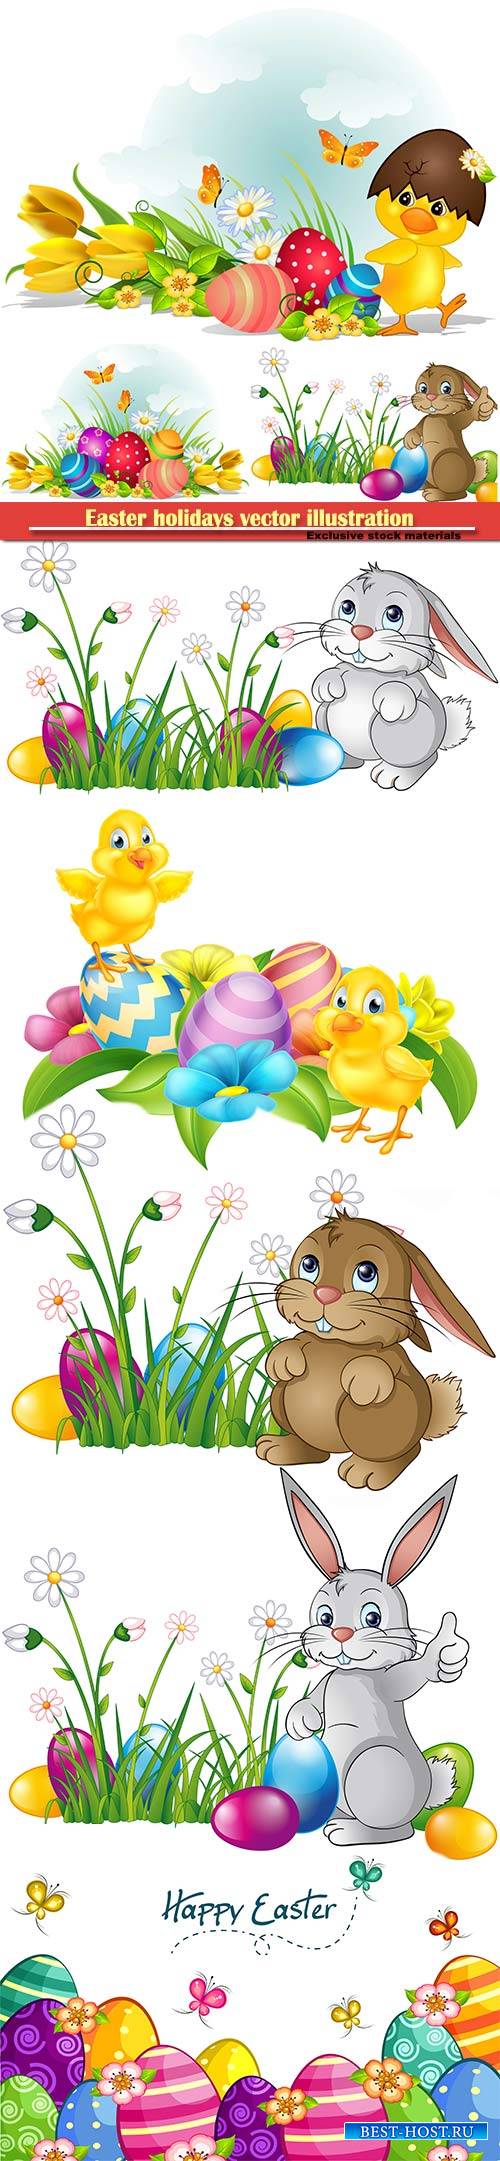 Easter holidays vector illustration # 5